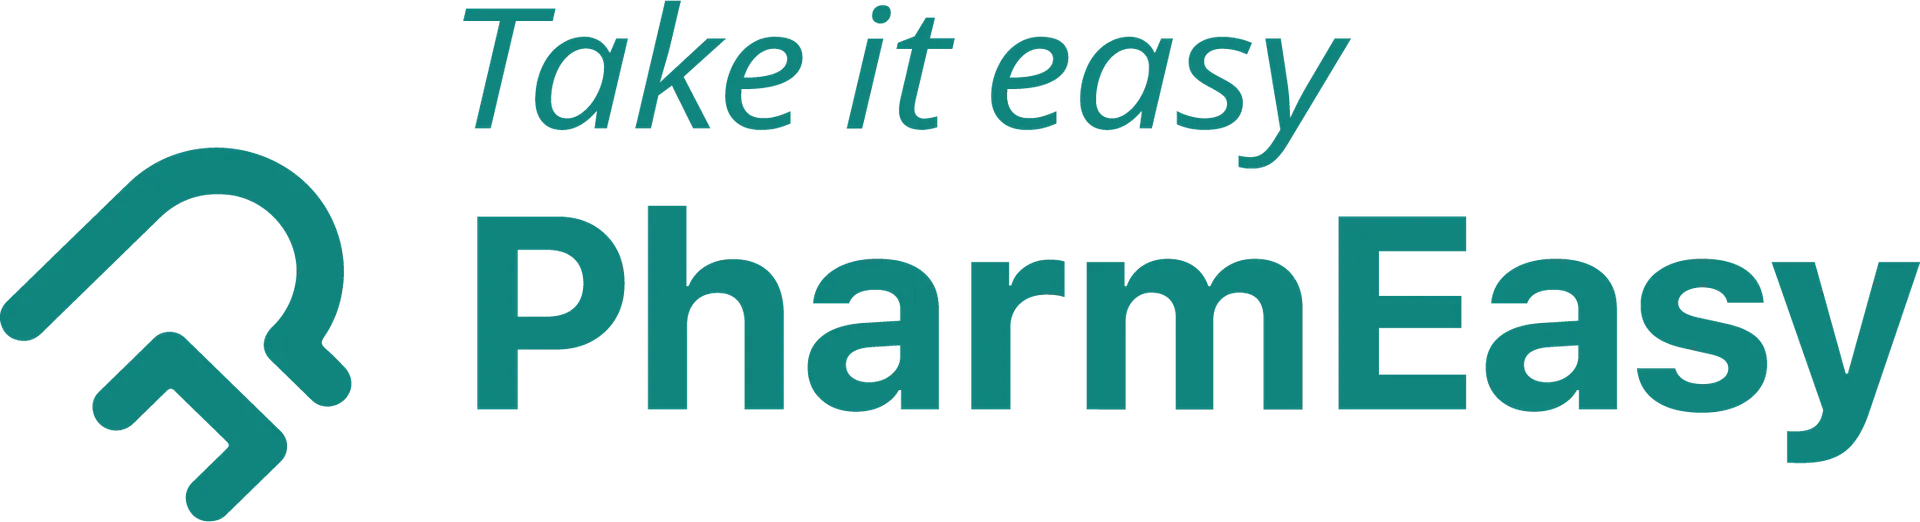 PHARMEASY logo. Current catalogue